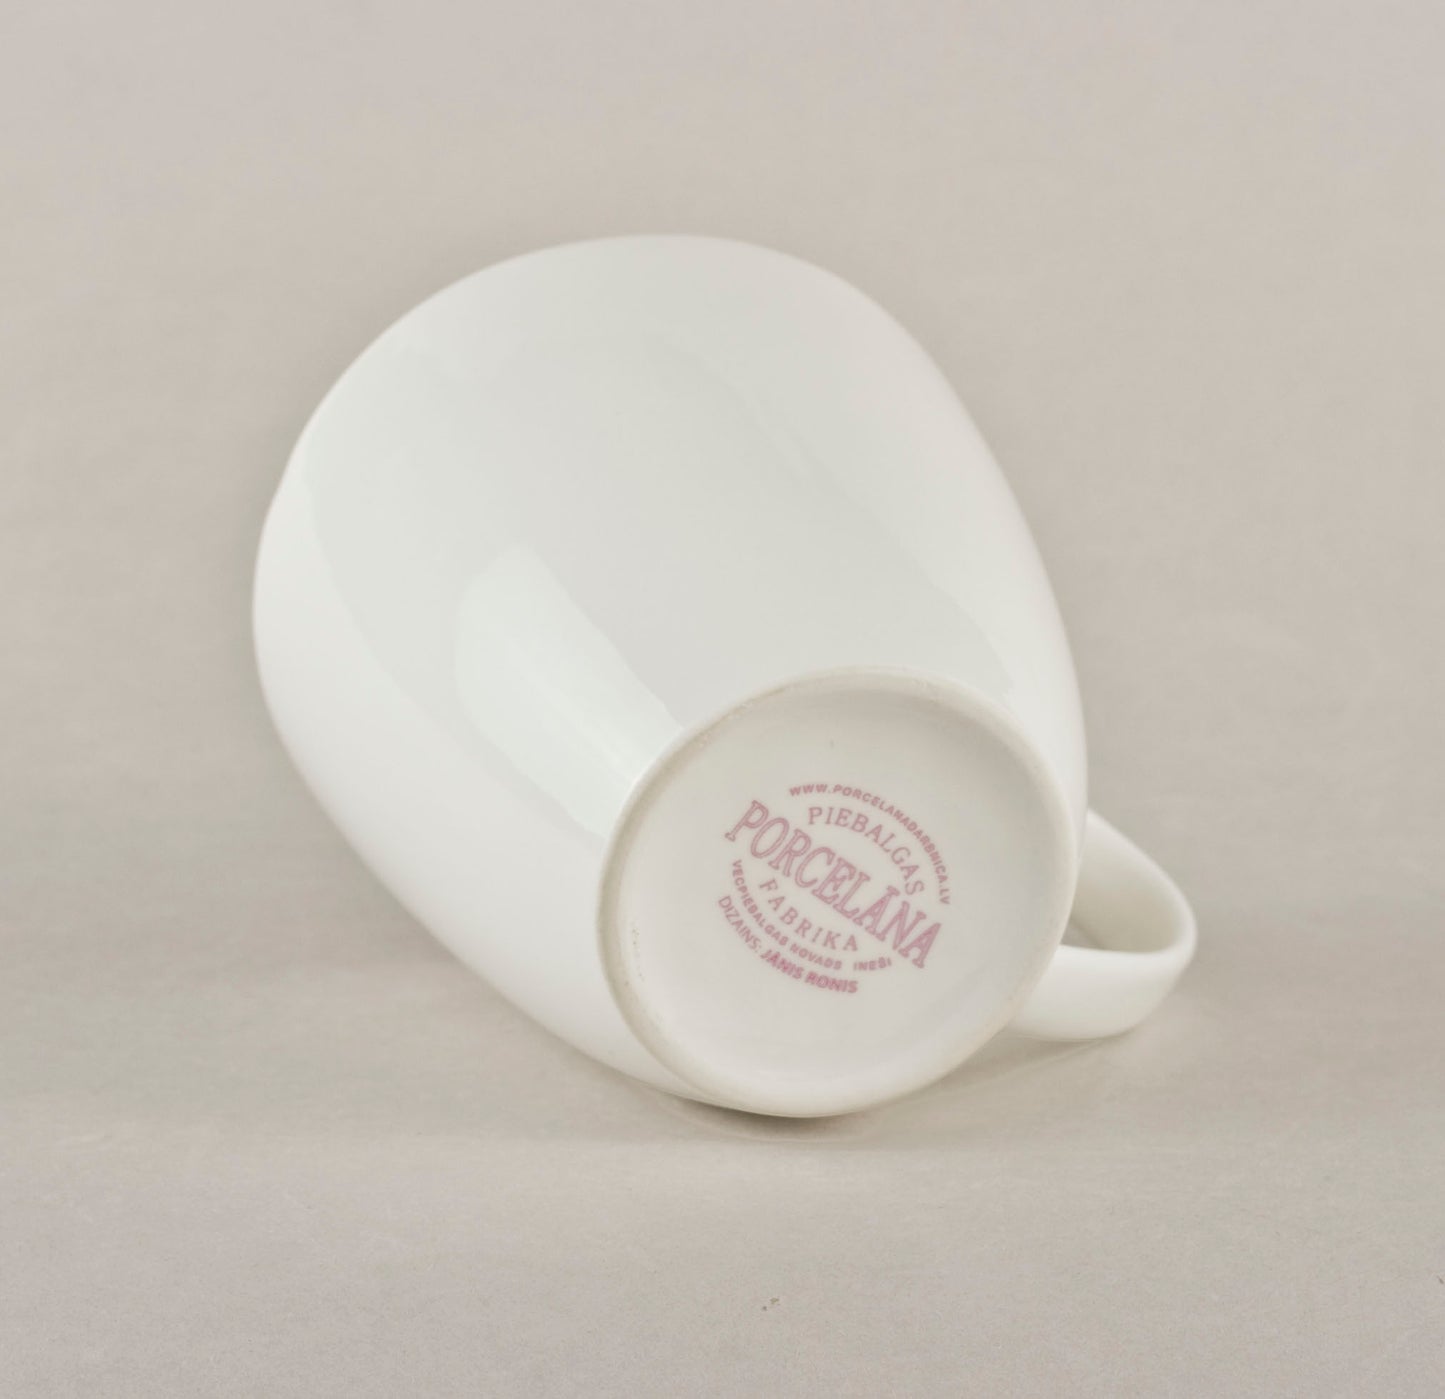 Porcelain Smooth Mug